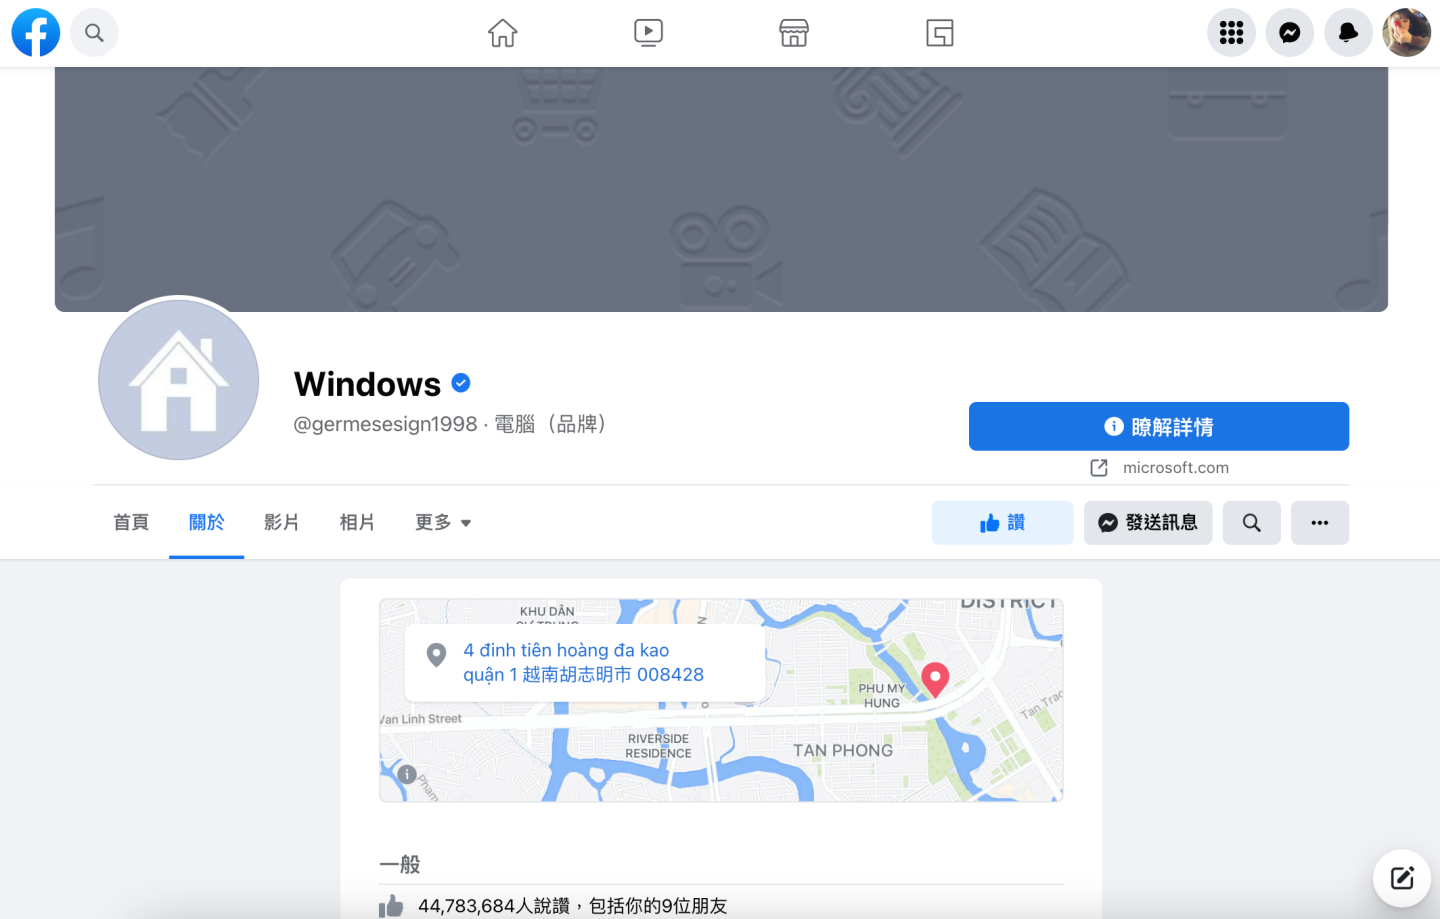 Windows 台灣臉書官方粉專被盜了？大頭貼和封面照片全消失 公司地址被改成越南胡志明